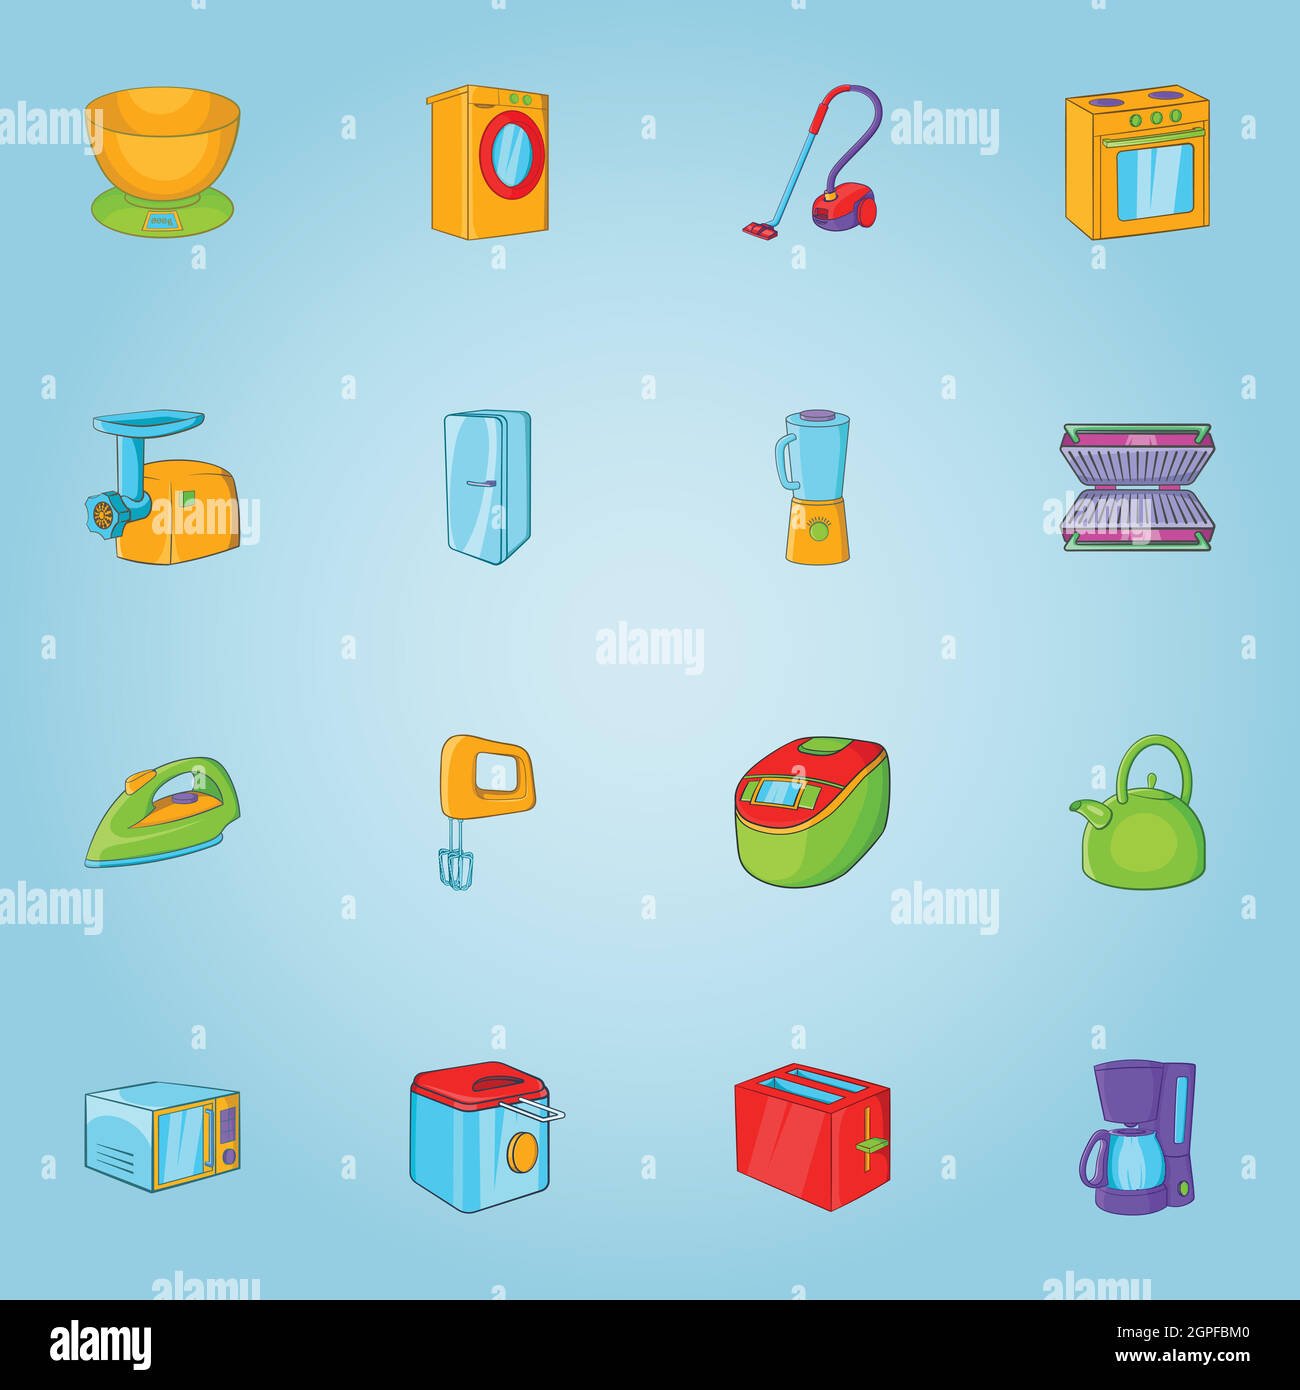 Home appliances icons set, cartoon style Stock Vector